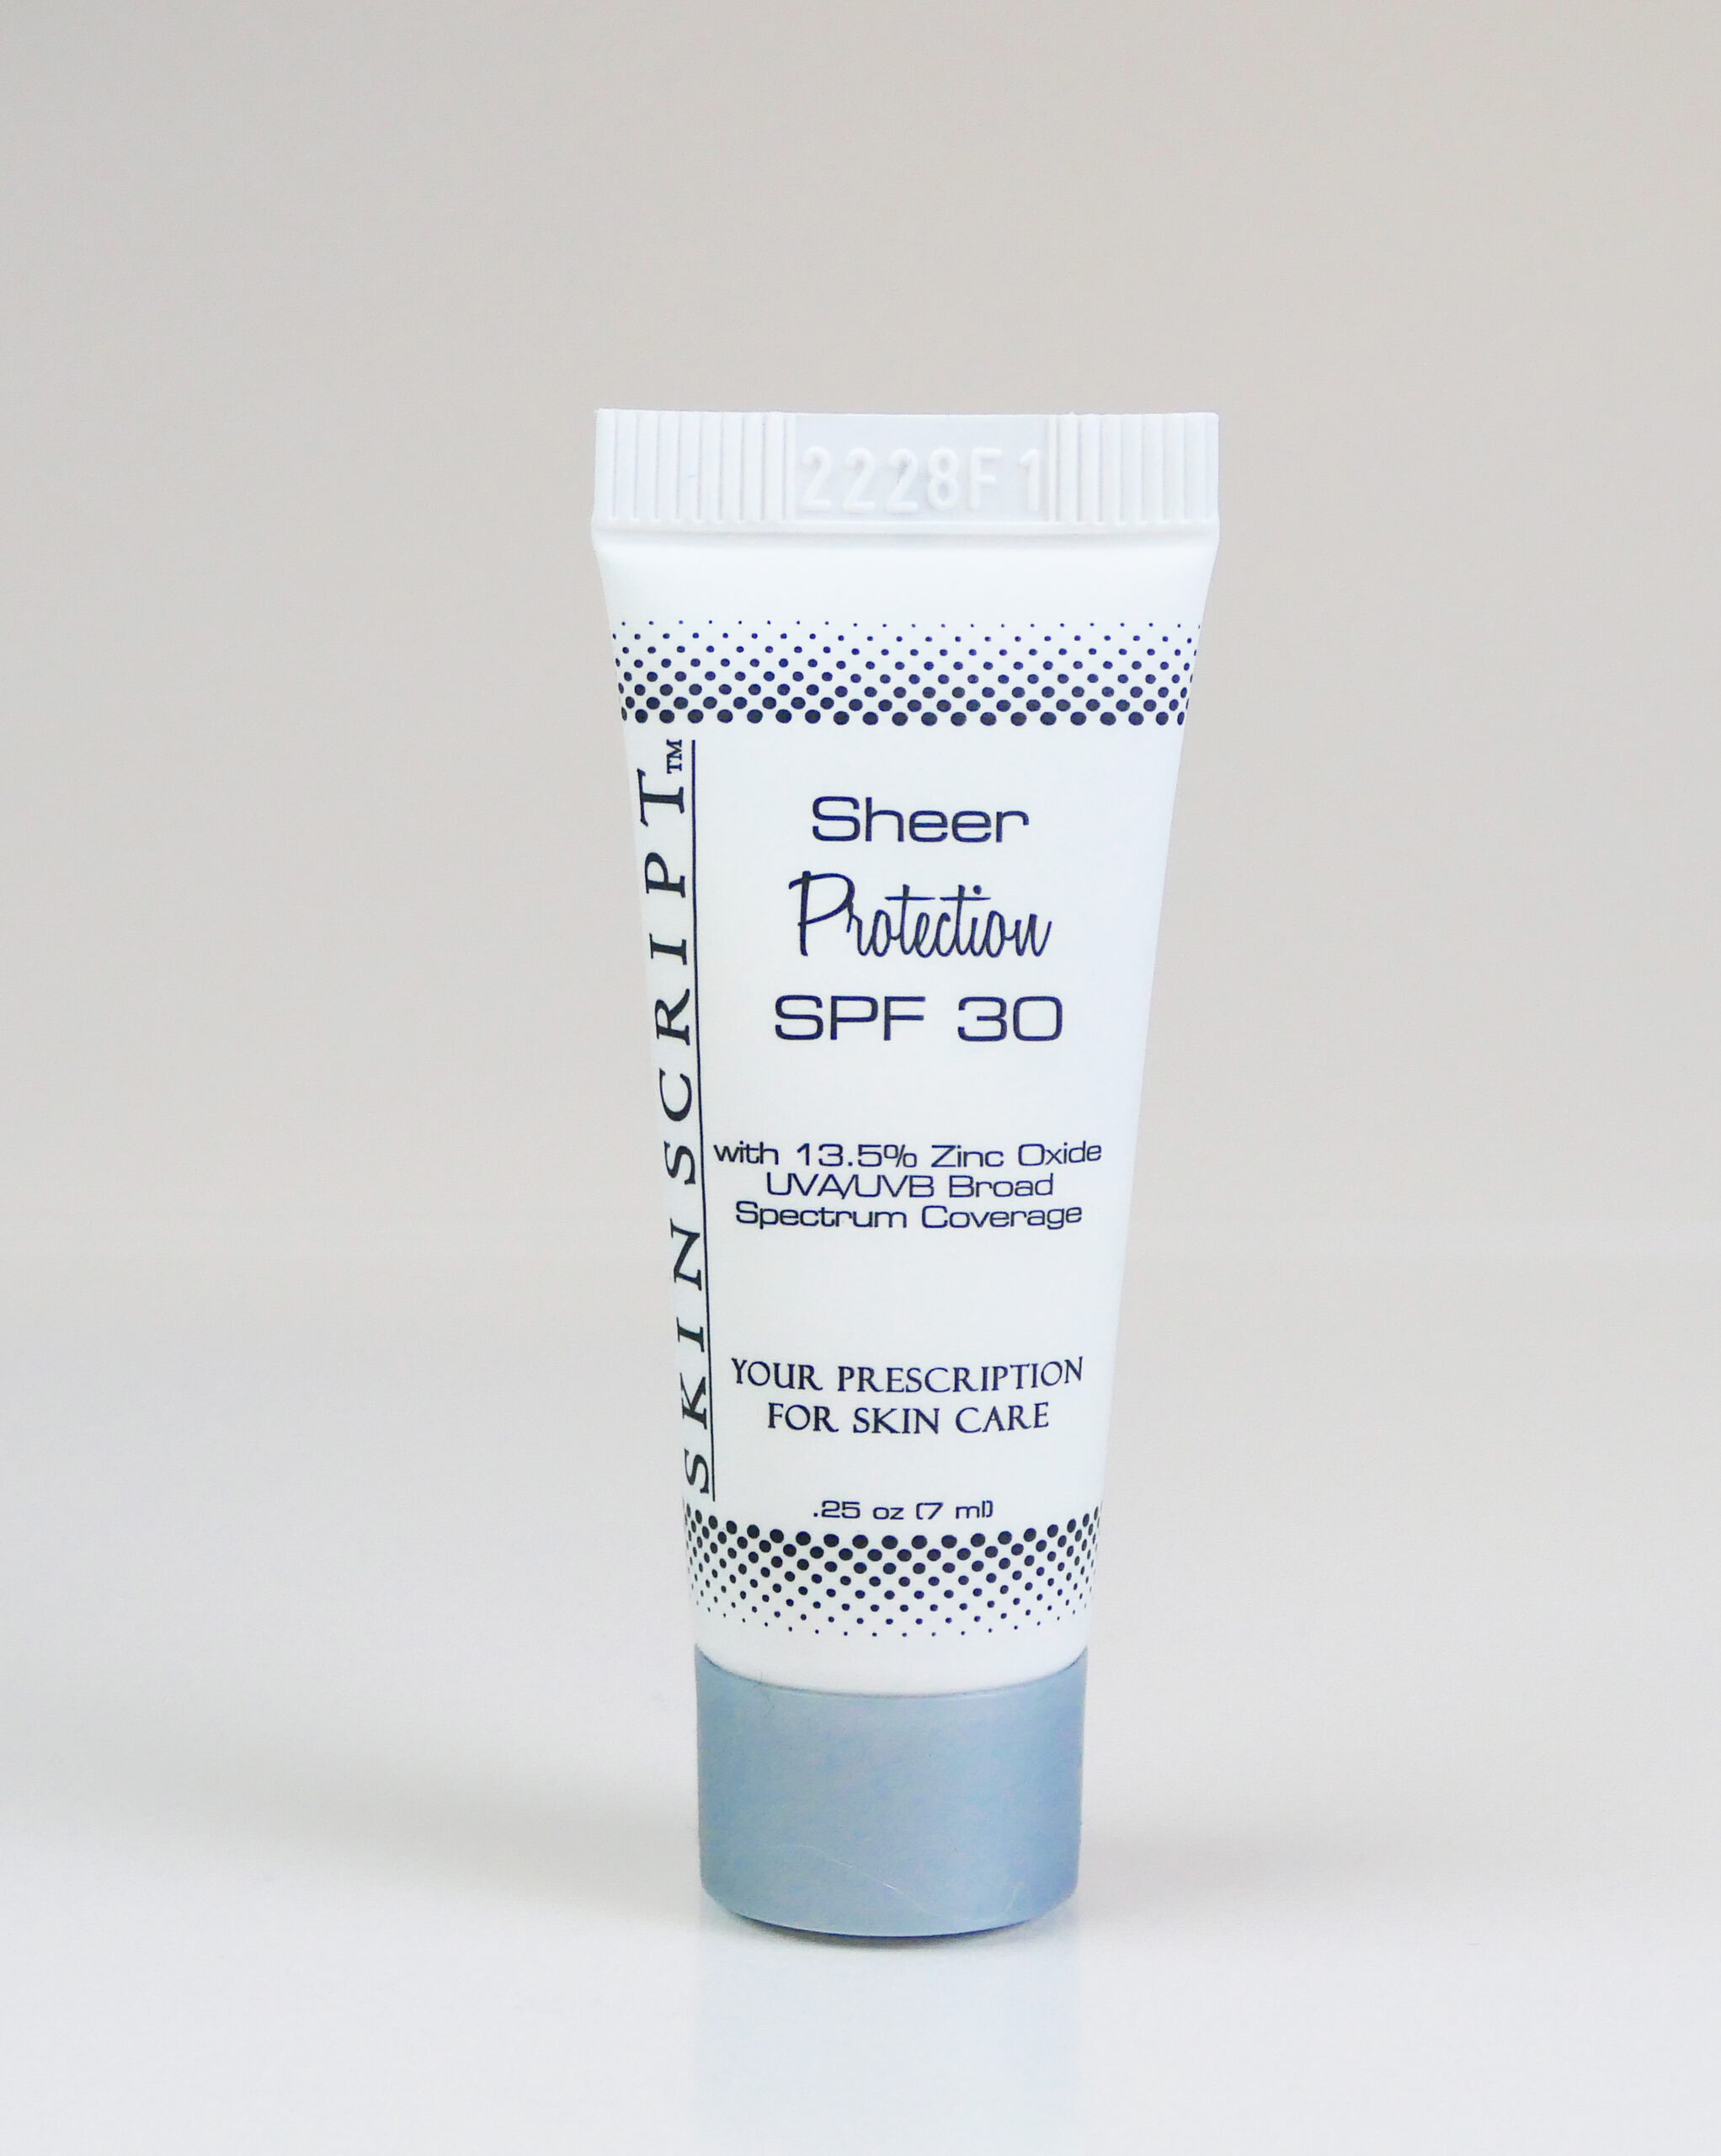 Sheer Protect Daily Cream SPF 30 Sunscreen